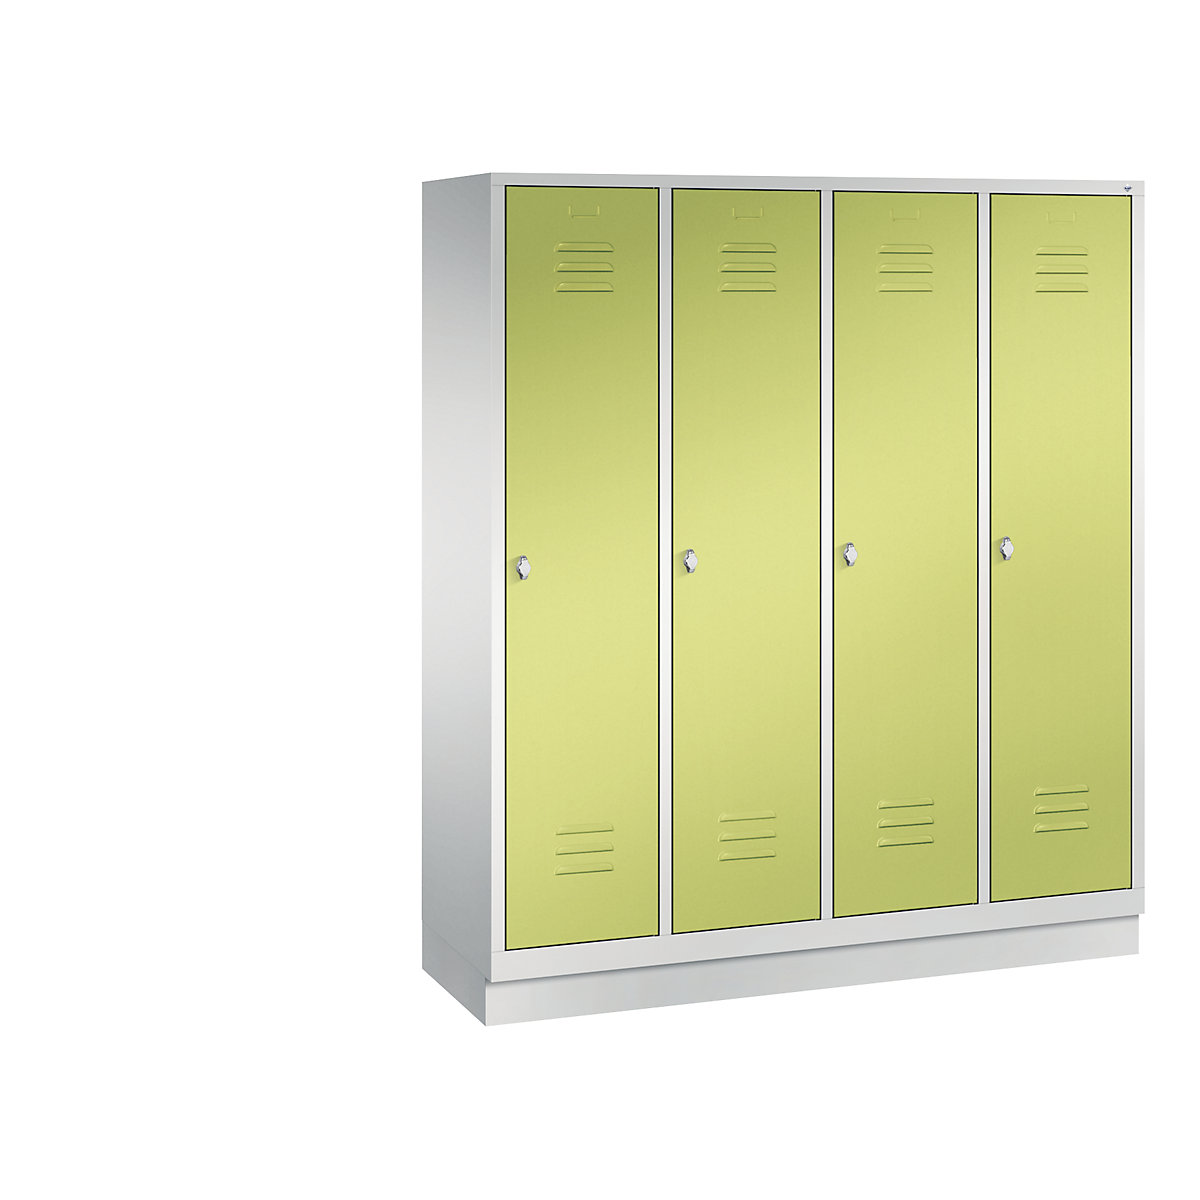 CLASSIC cloakroom locker with plinth – C+P